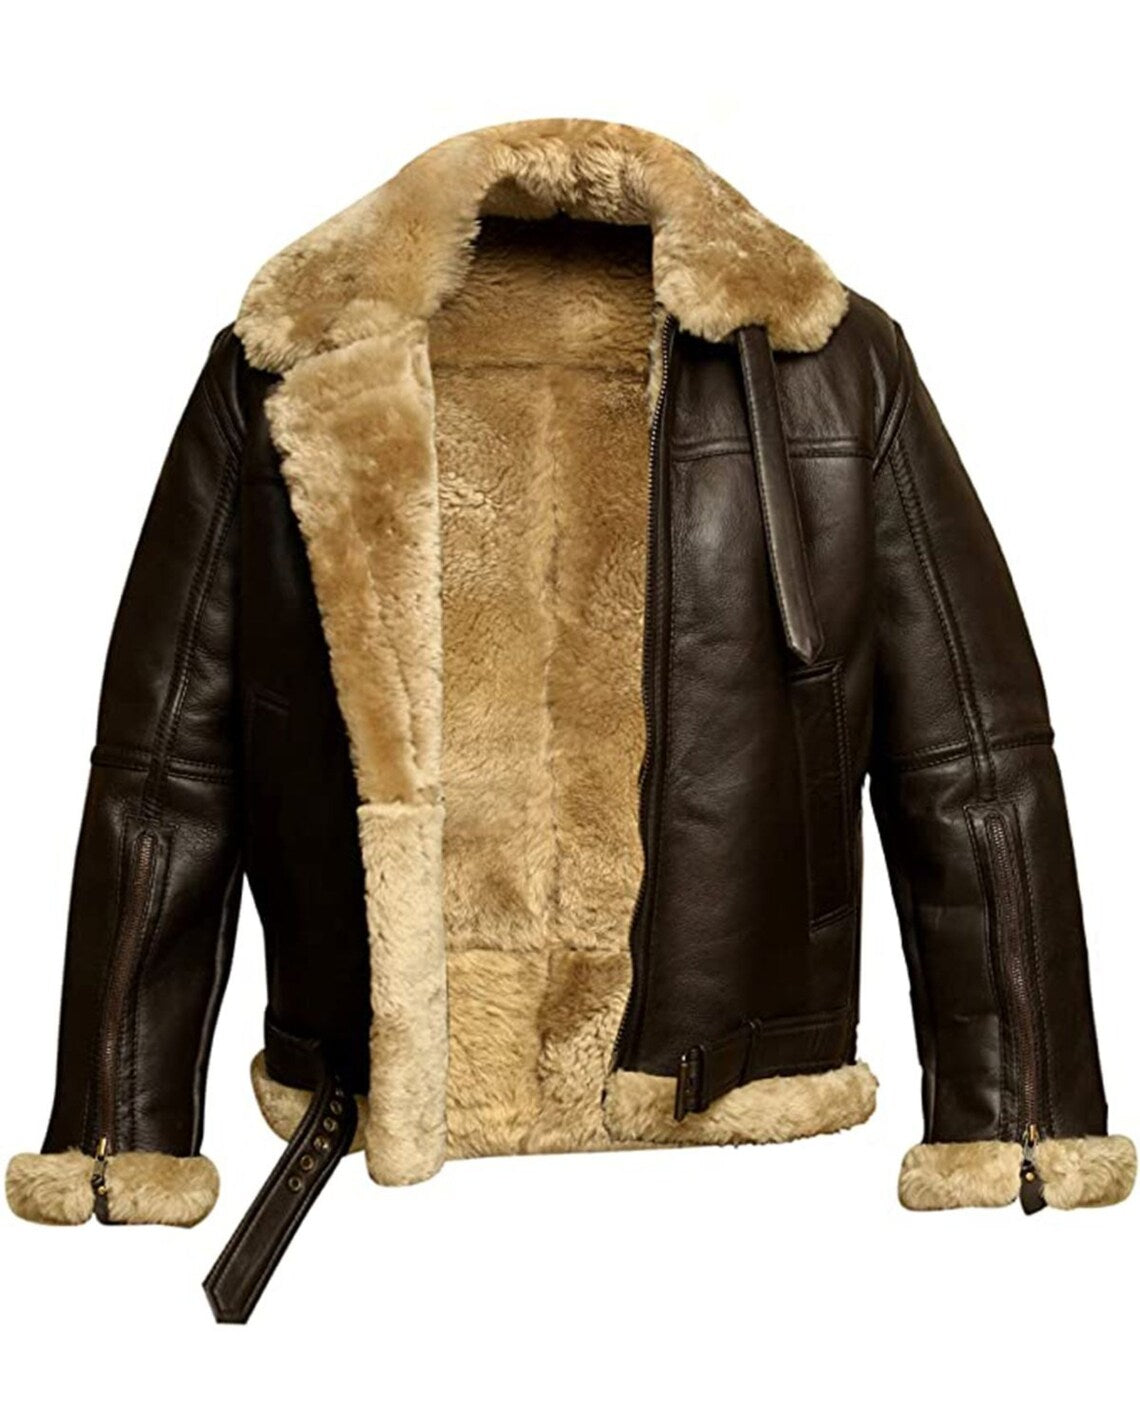 Skin Shearling Fur-Lined Black Leather Jacket